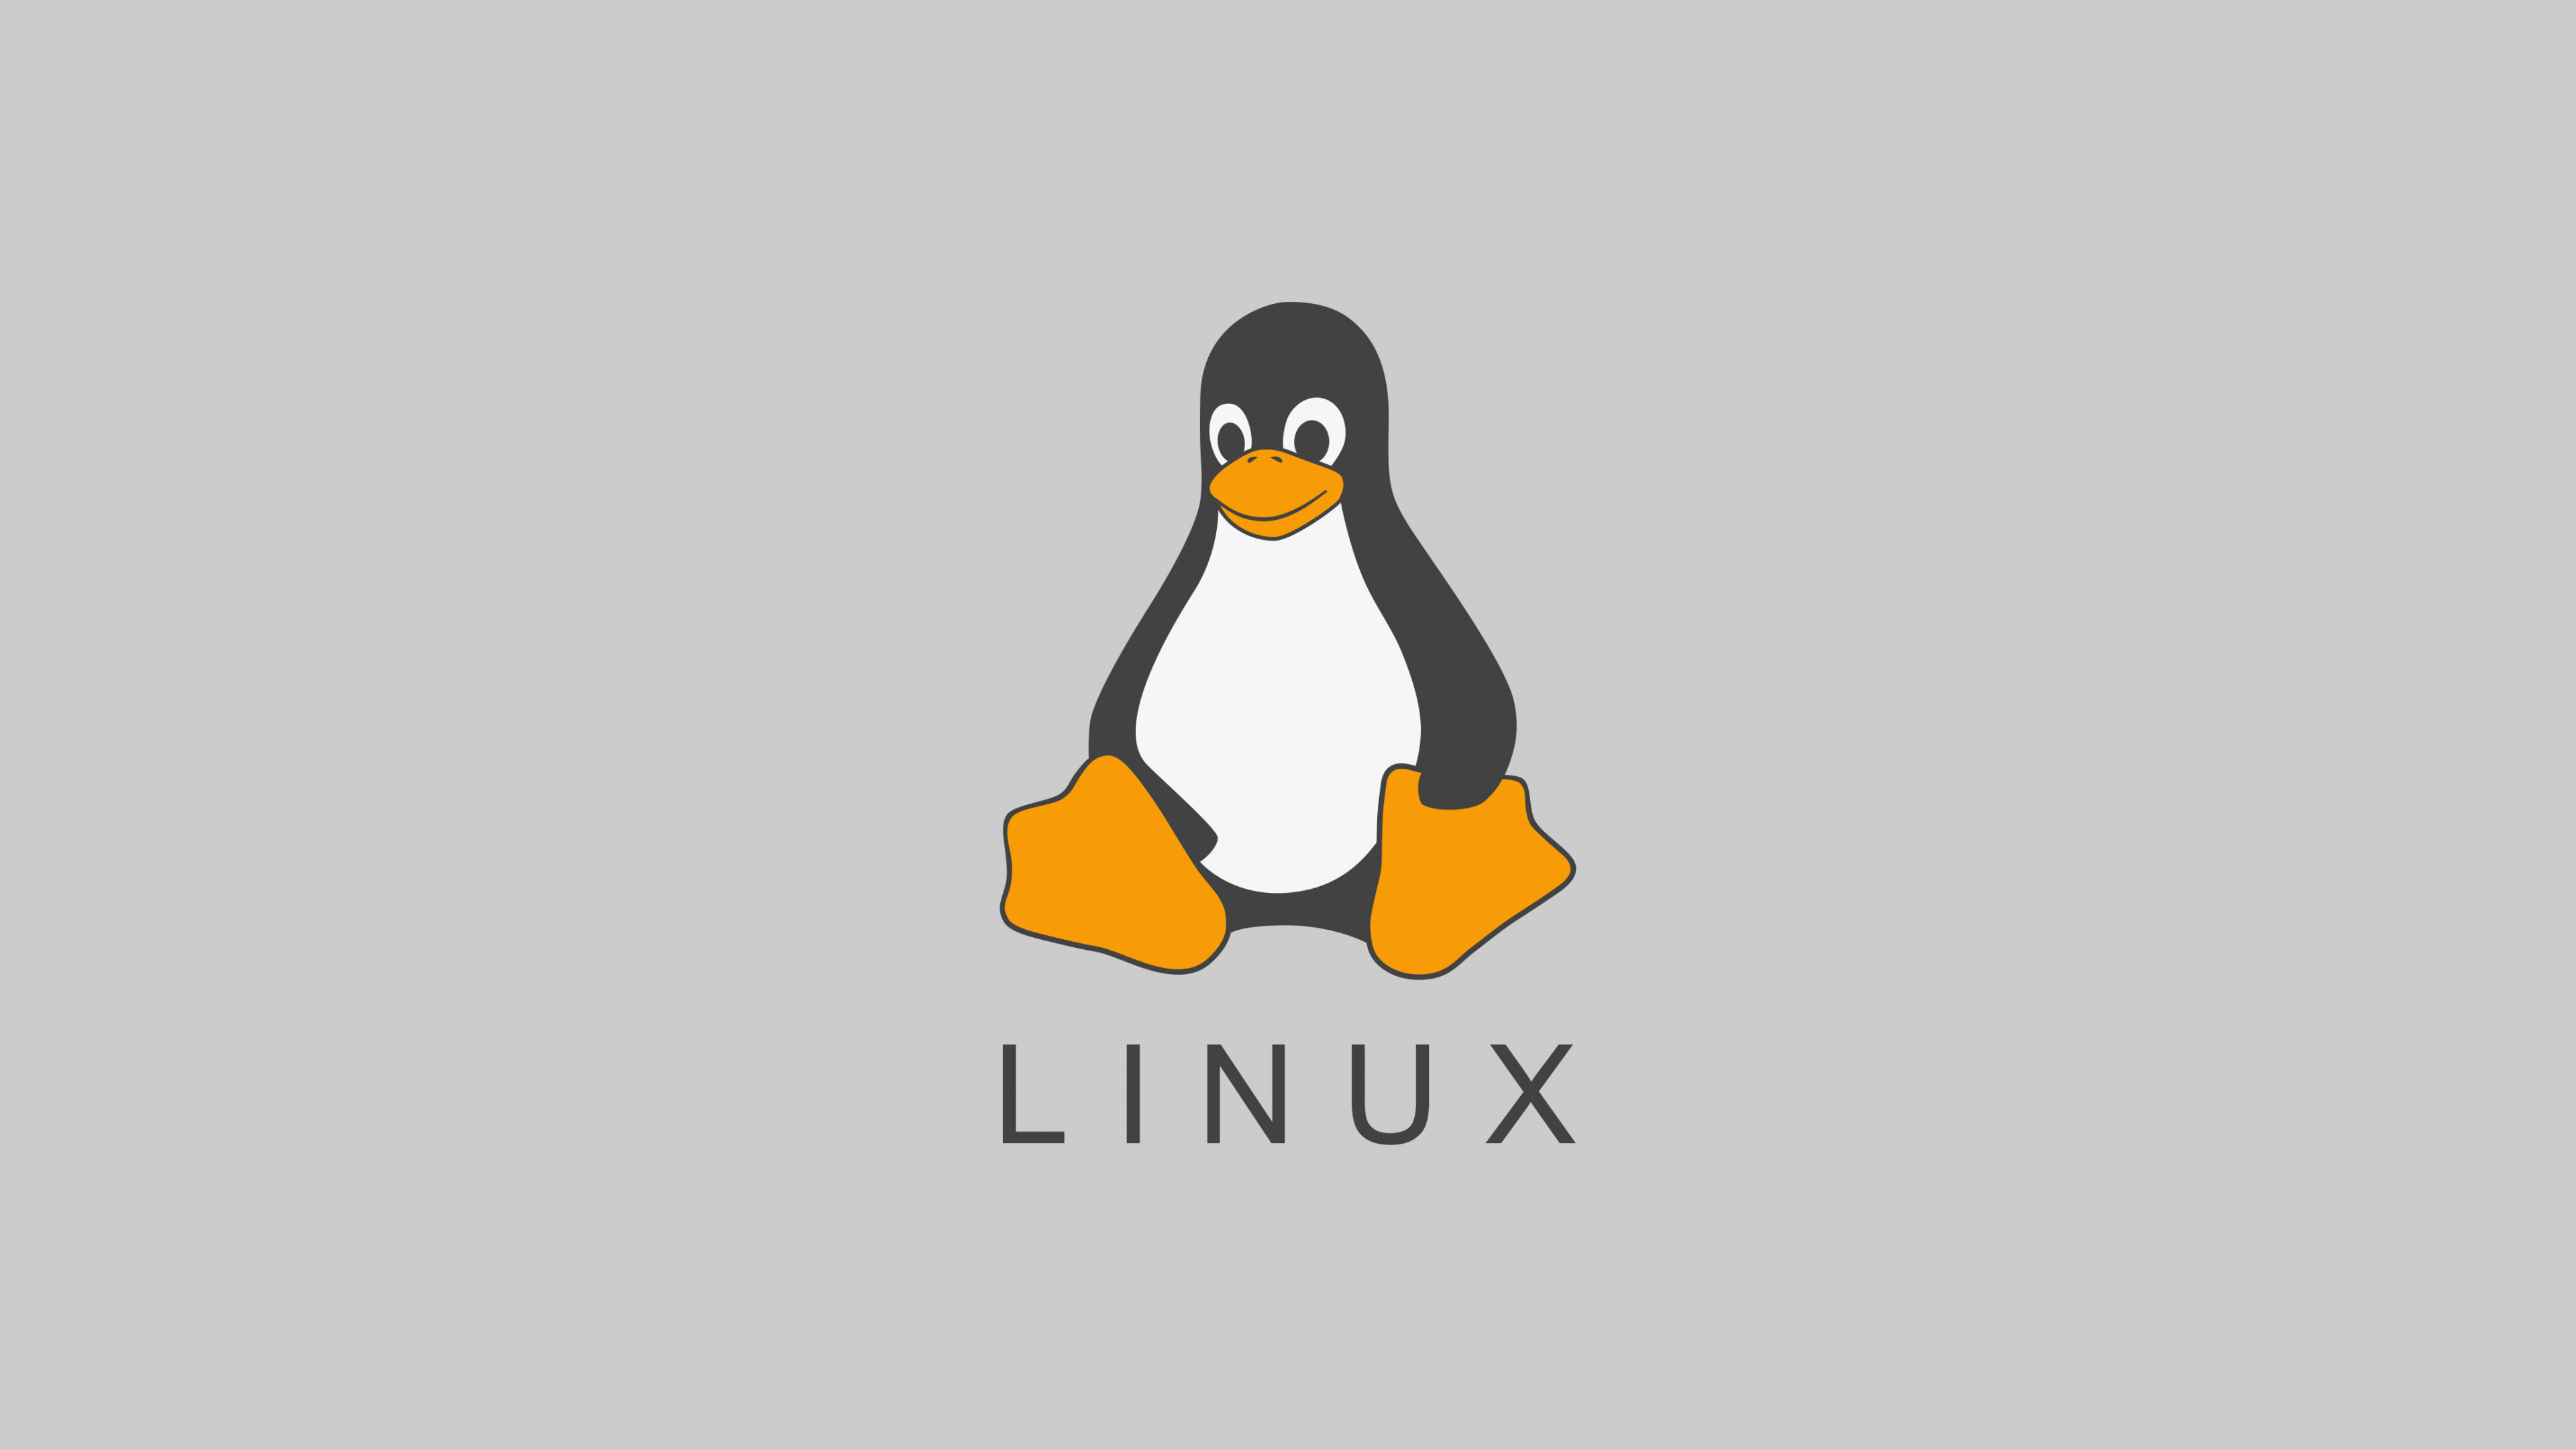 Linux, 晚礼服, Ubuntu, 不会飞的鸟, 鸟 壁纸 3840x2160 允许